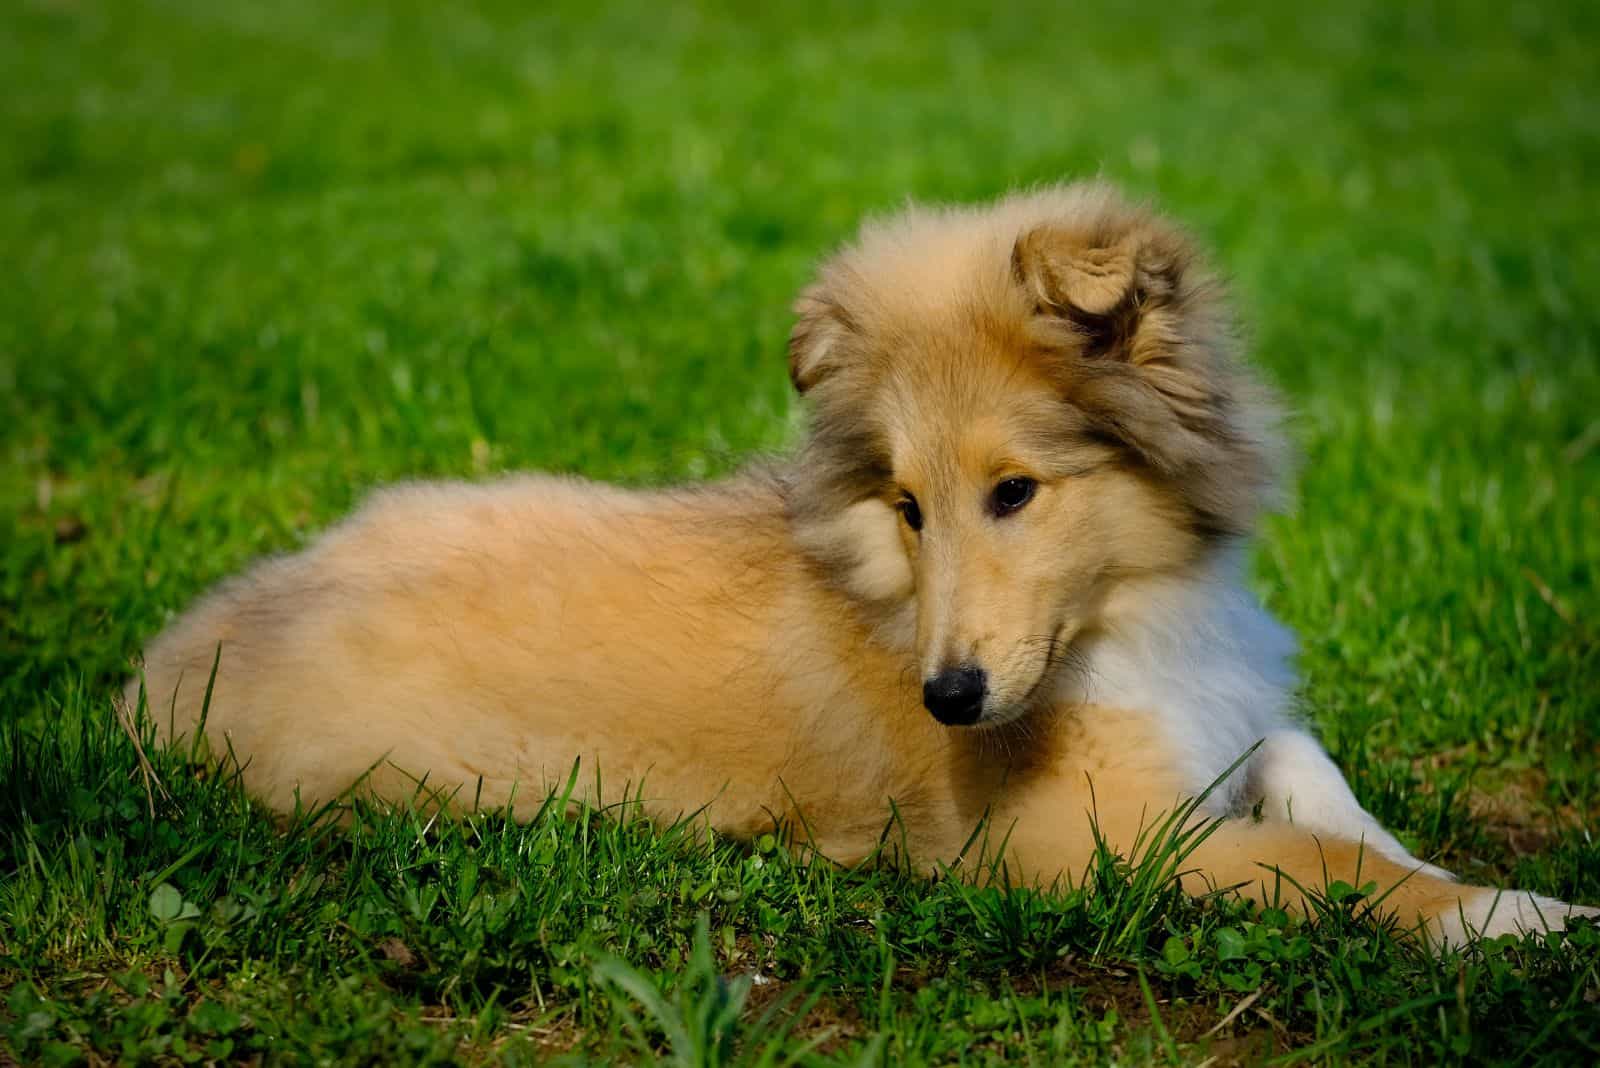 Rough Collie puppy lies on the grass